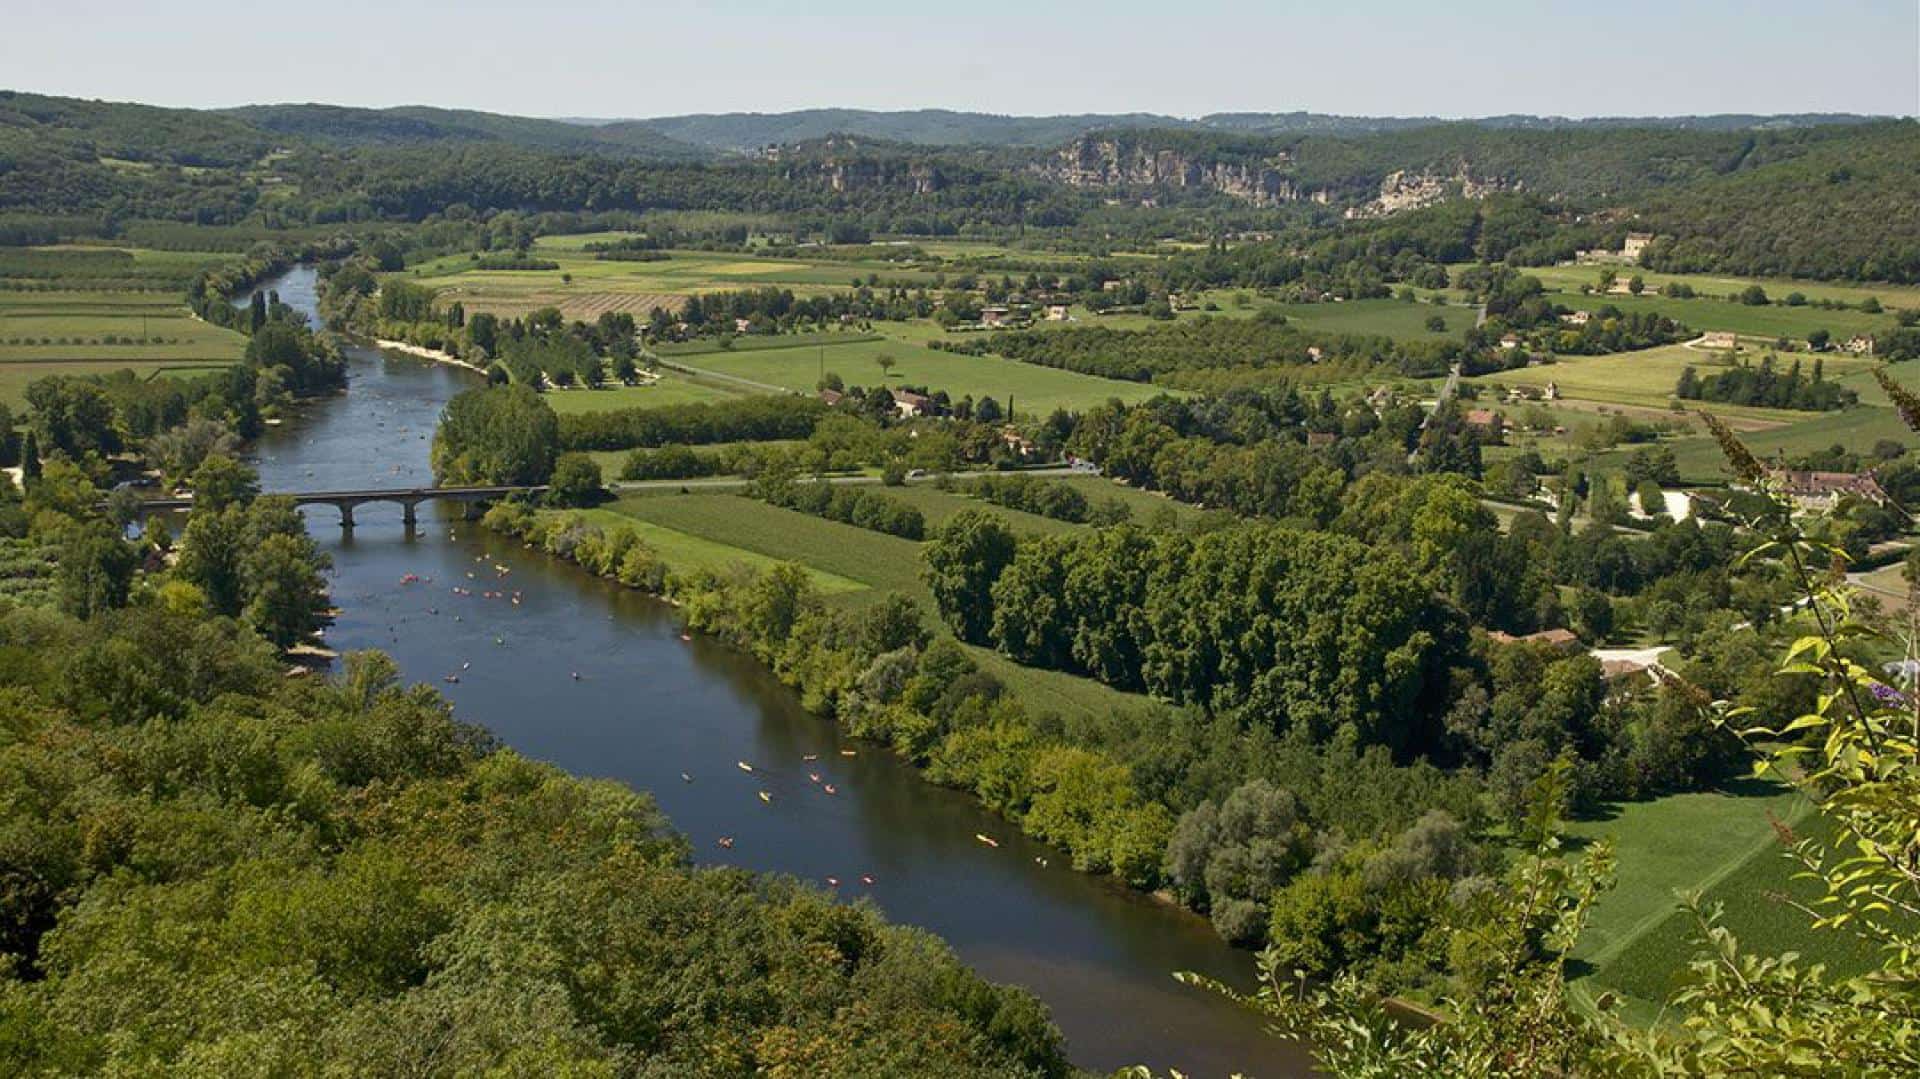 De Dordogne